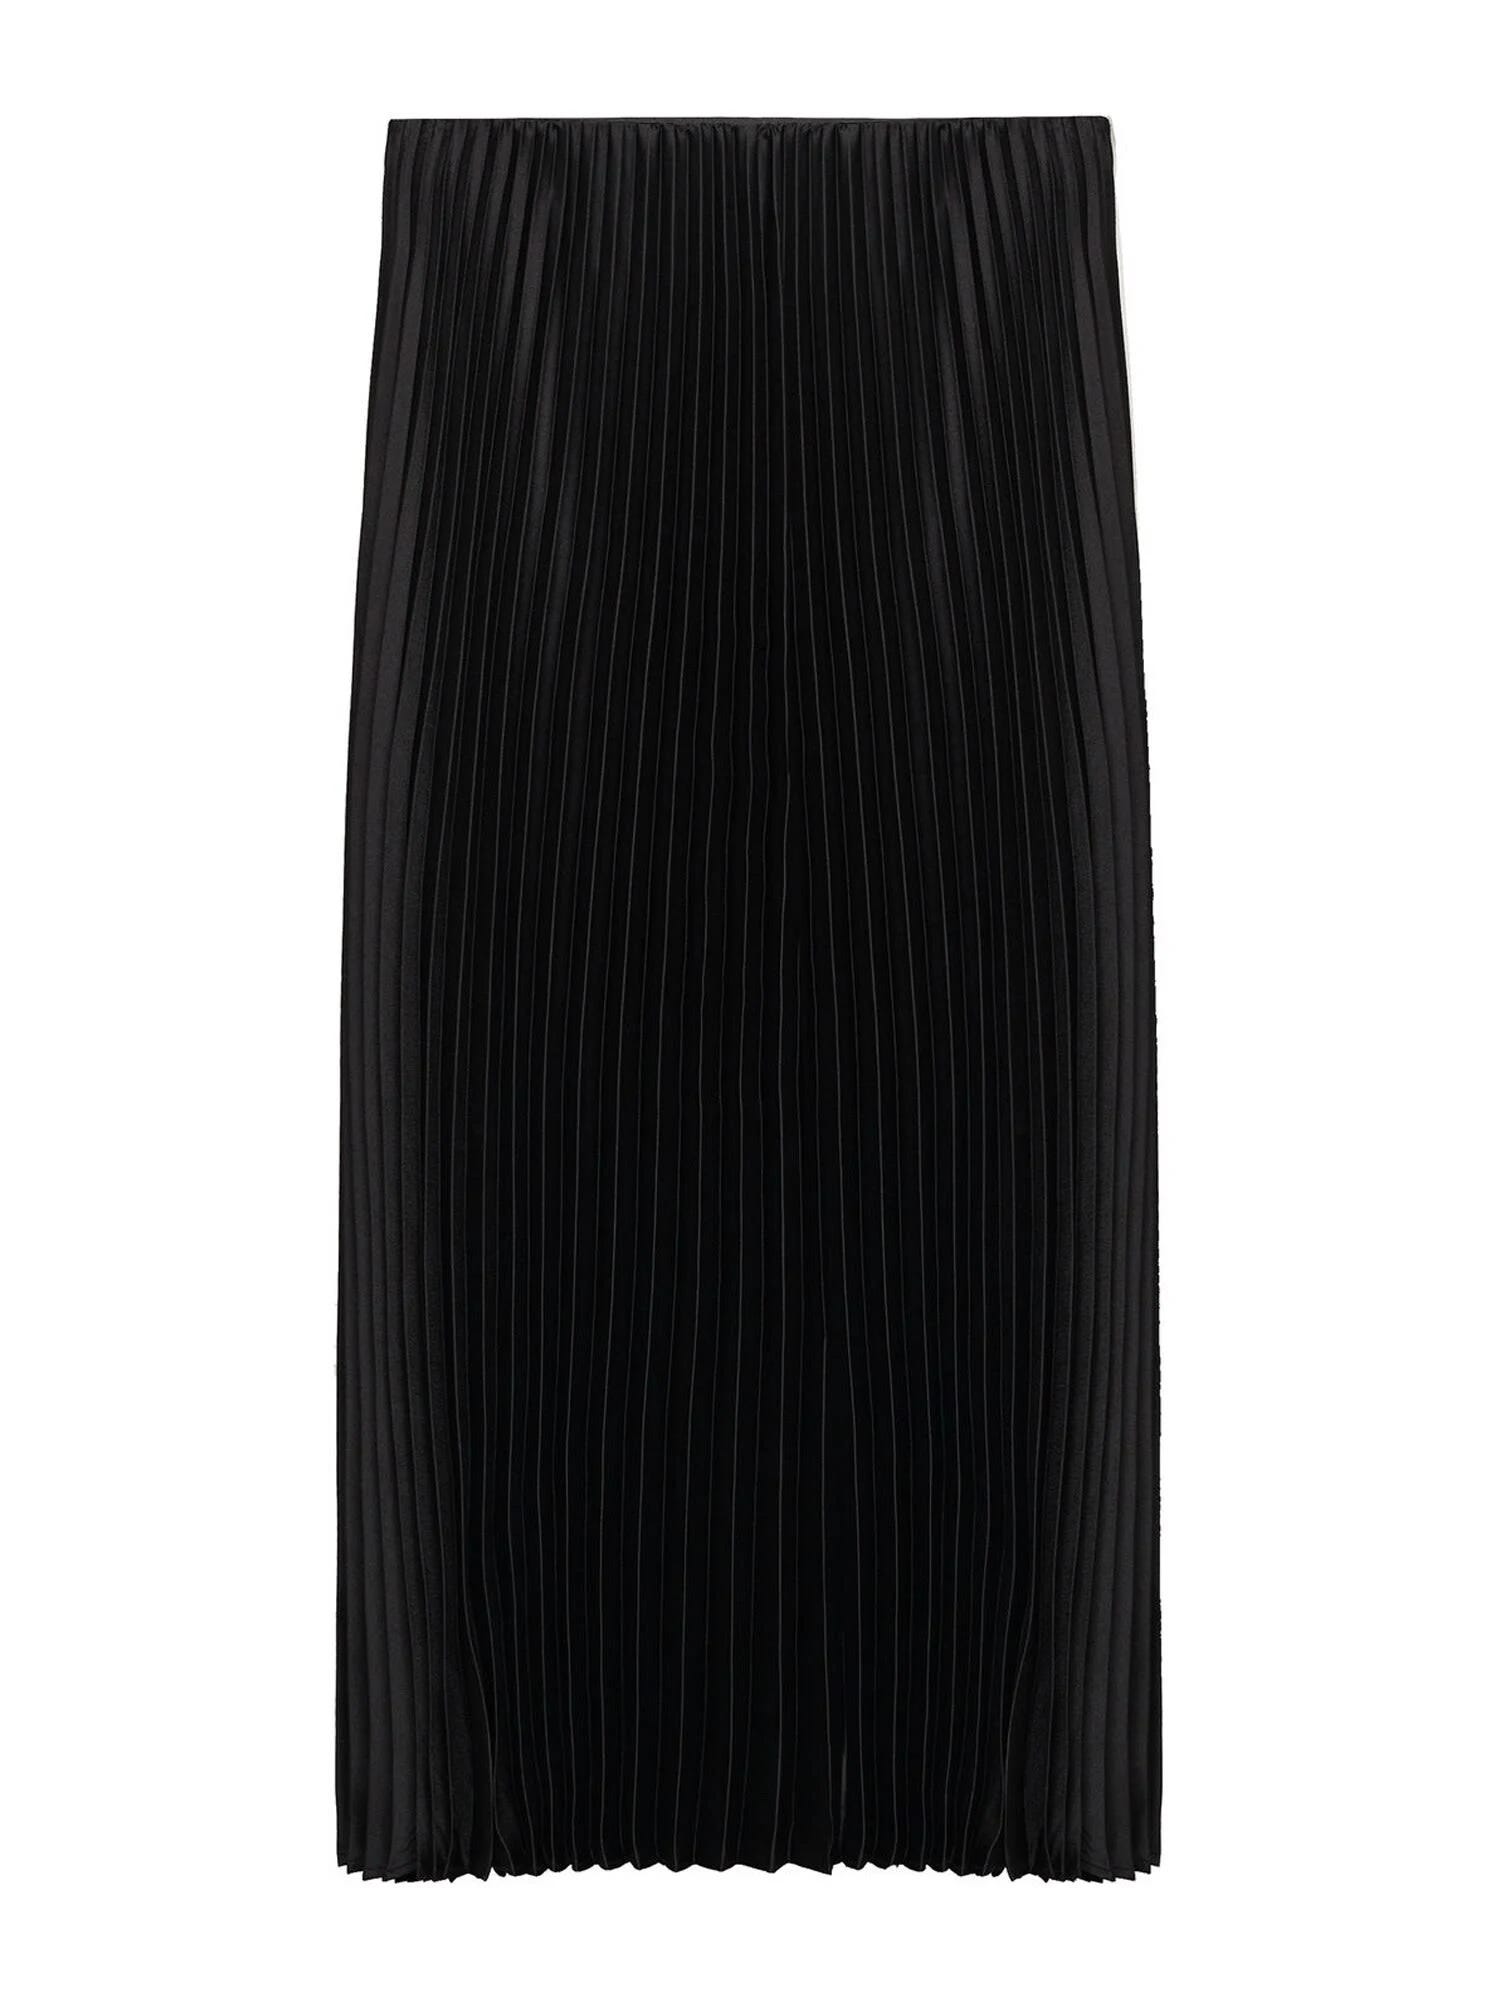 Black Satin Midi Skirt from Mango | Image